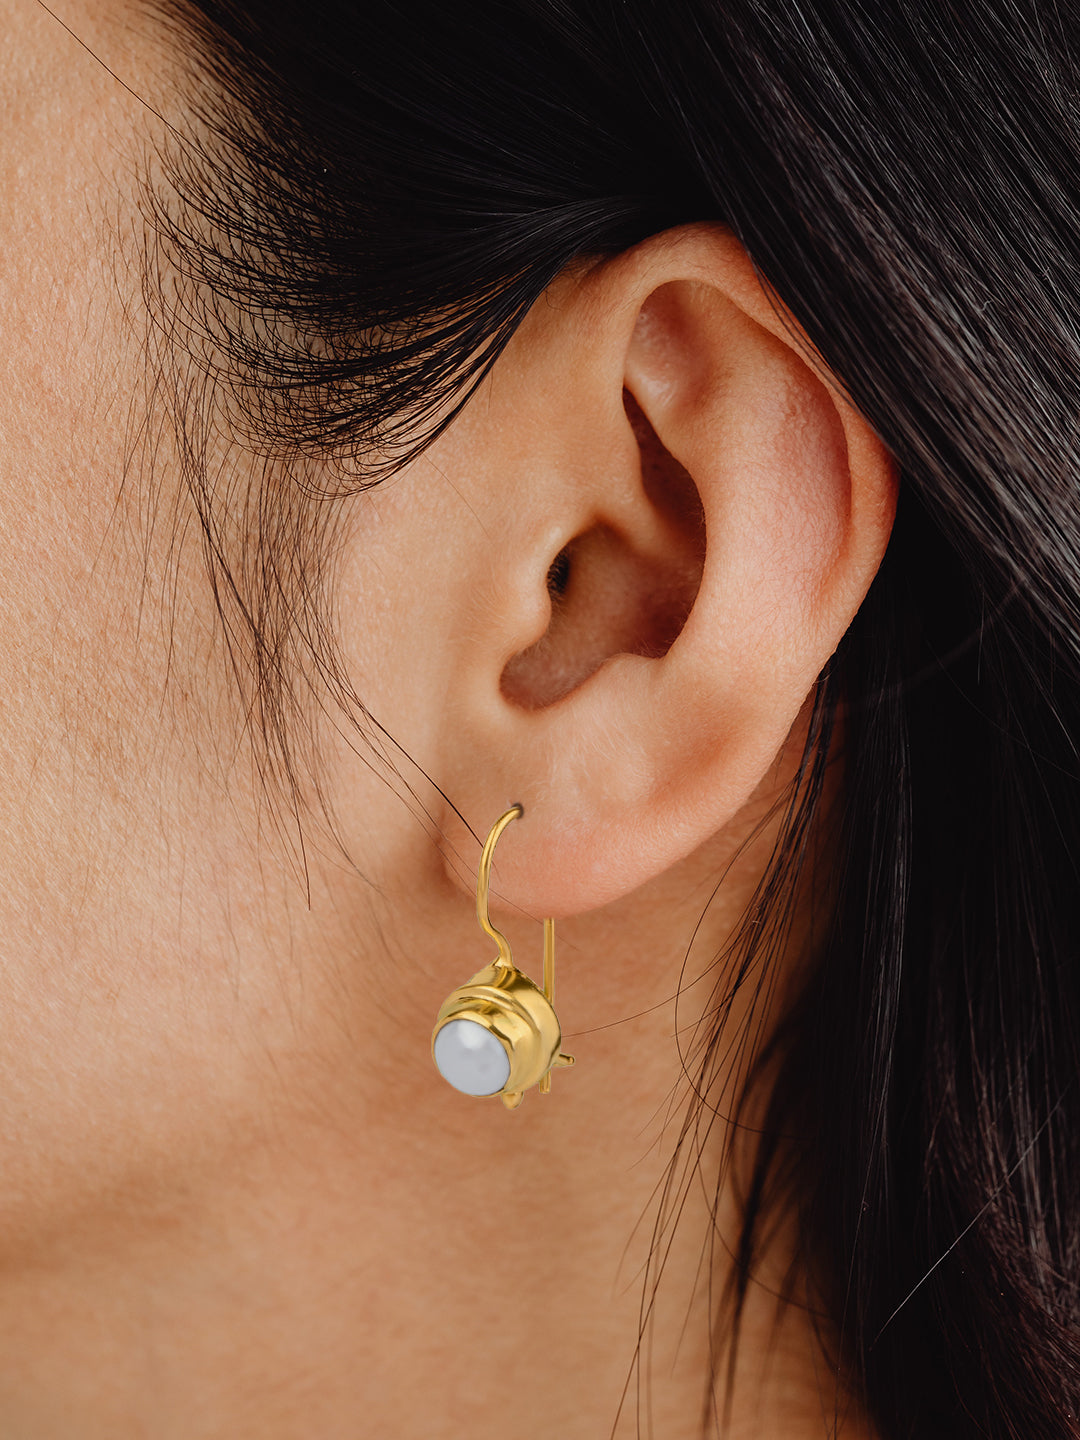 Small Pearl Dangler Earrings